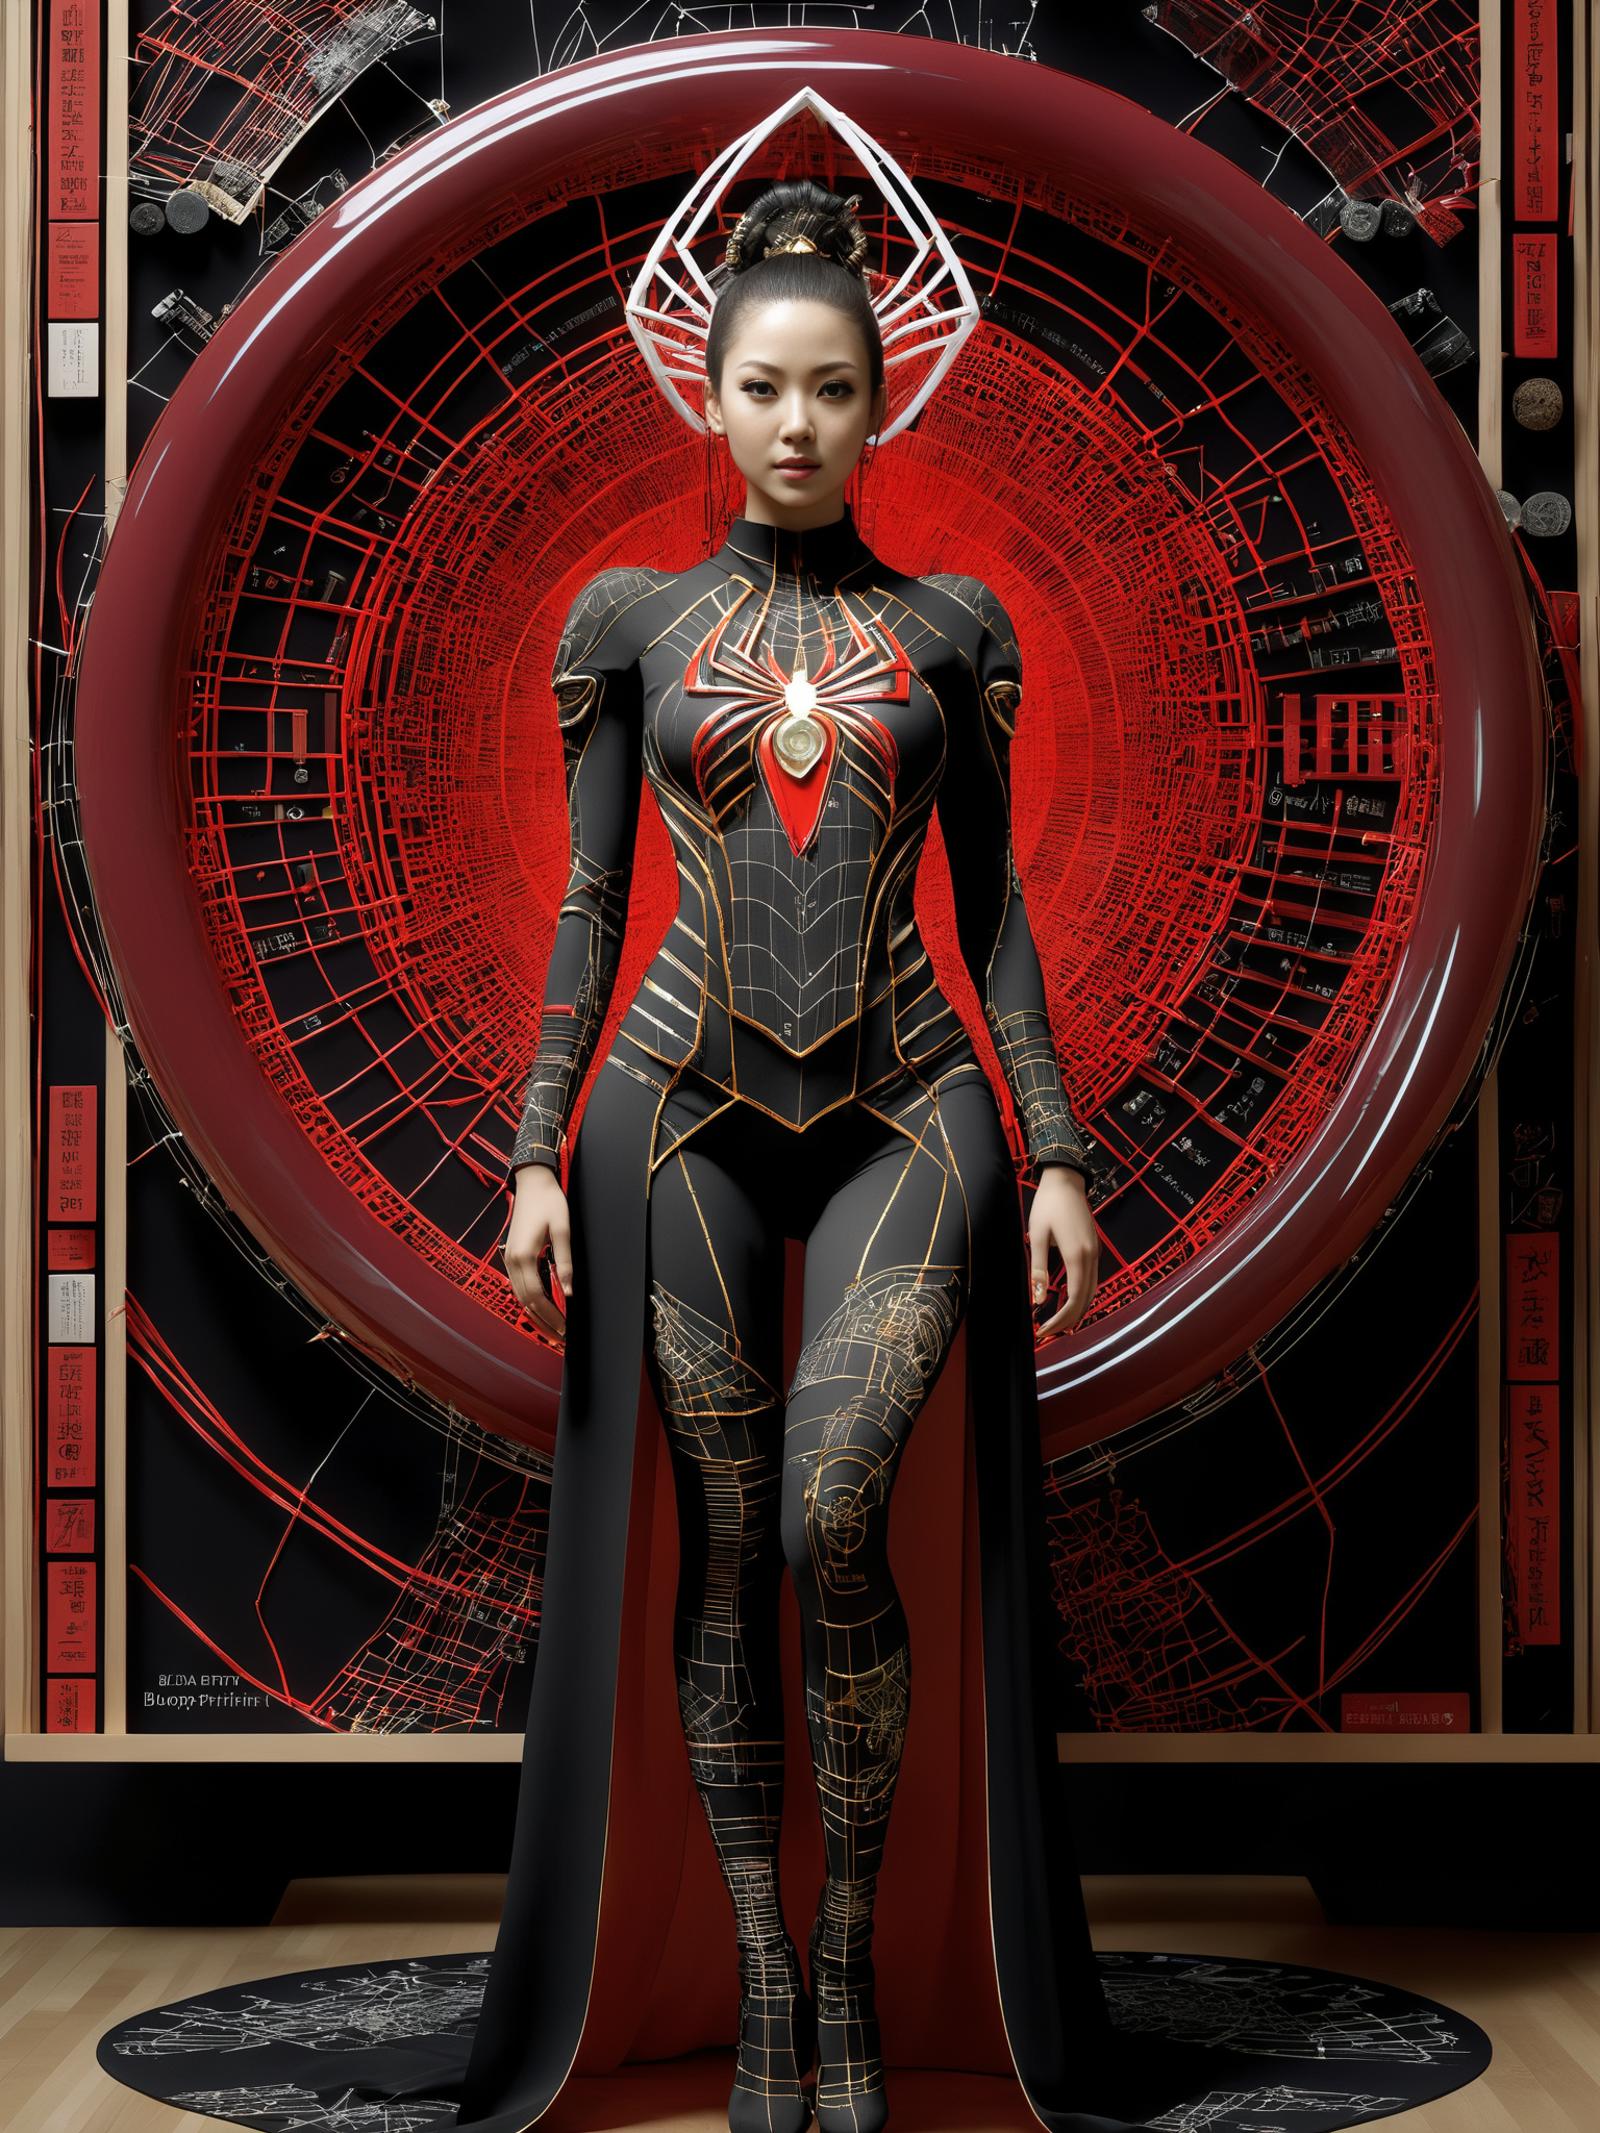 A woman in a futuristic costume stands inside a red circle.